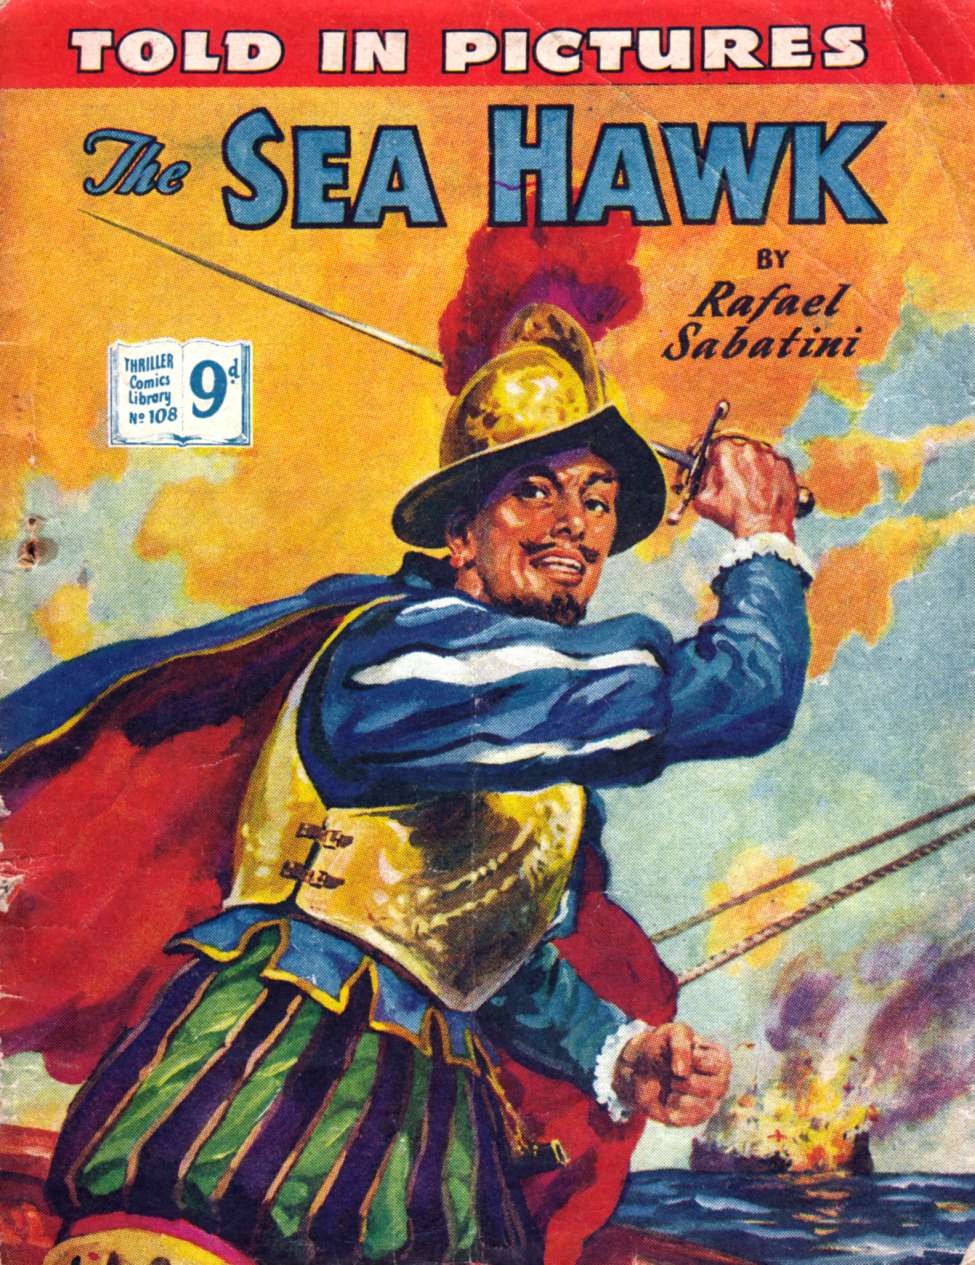 Comic Book Cover For Thriller Comics Library 108 - The Sea Hawk